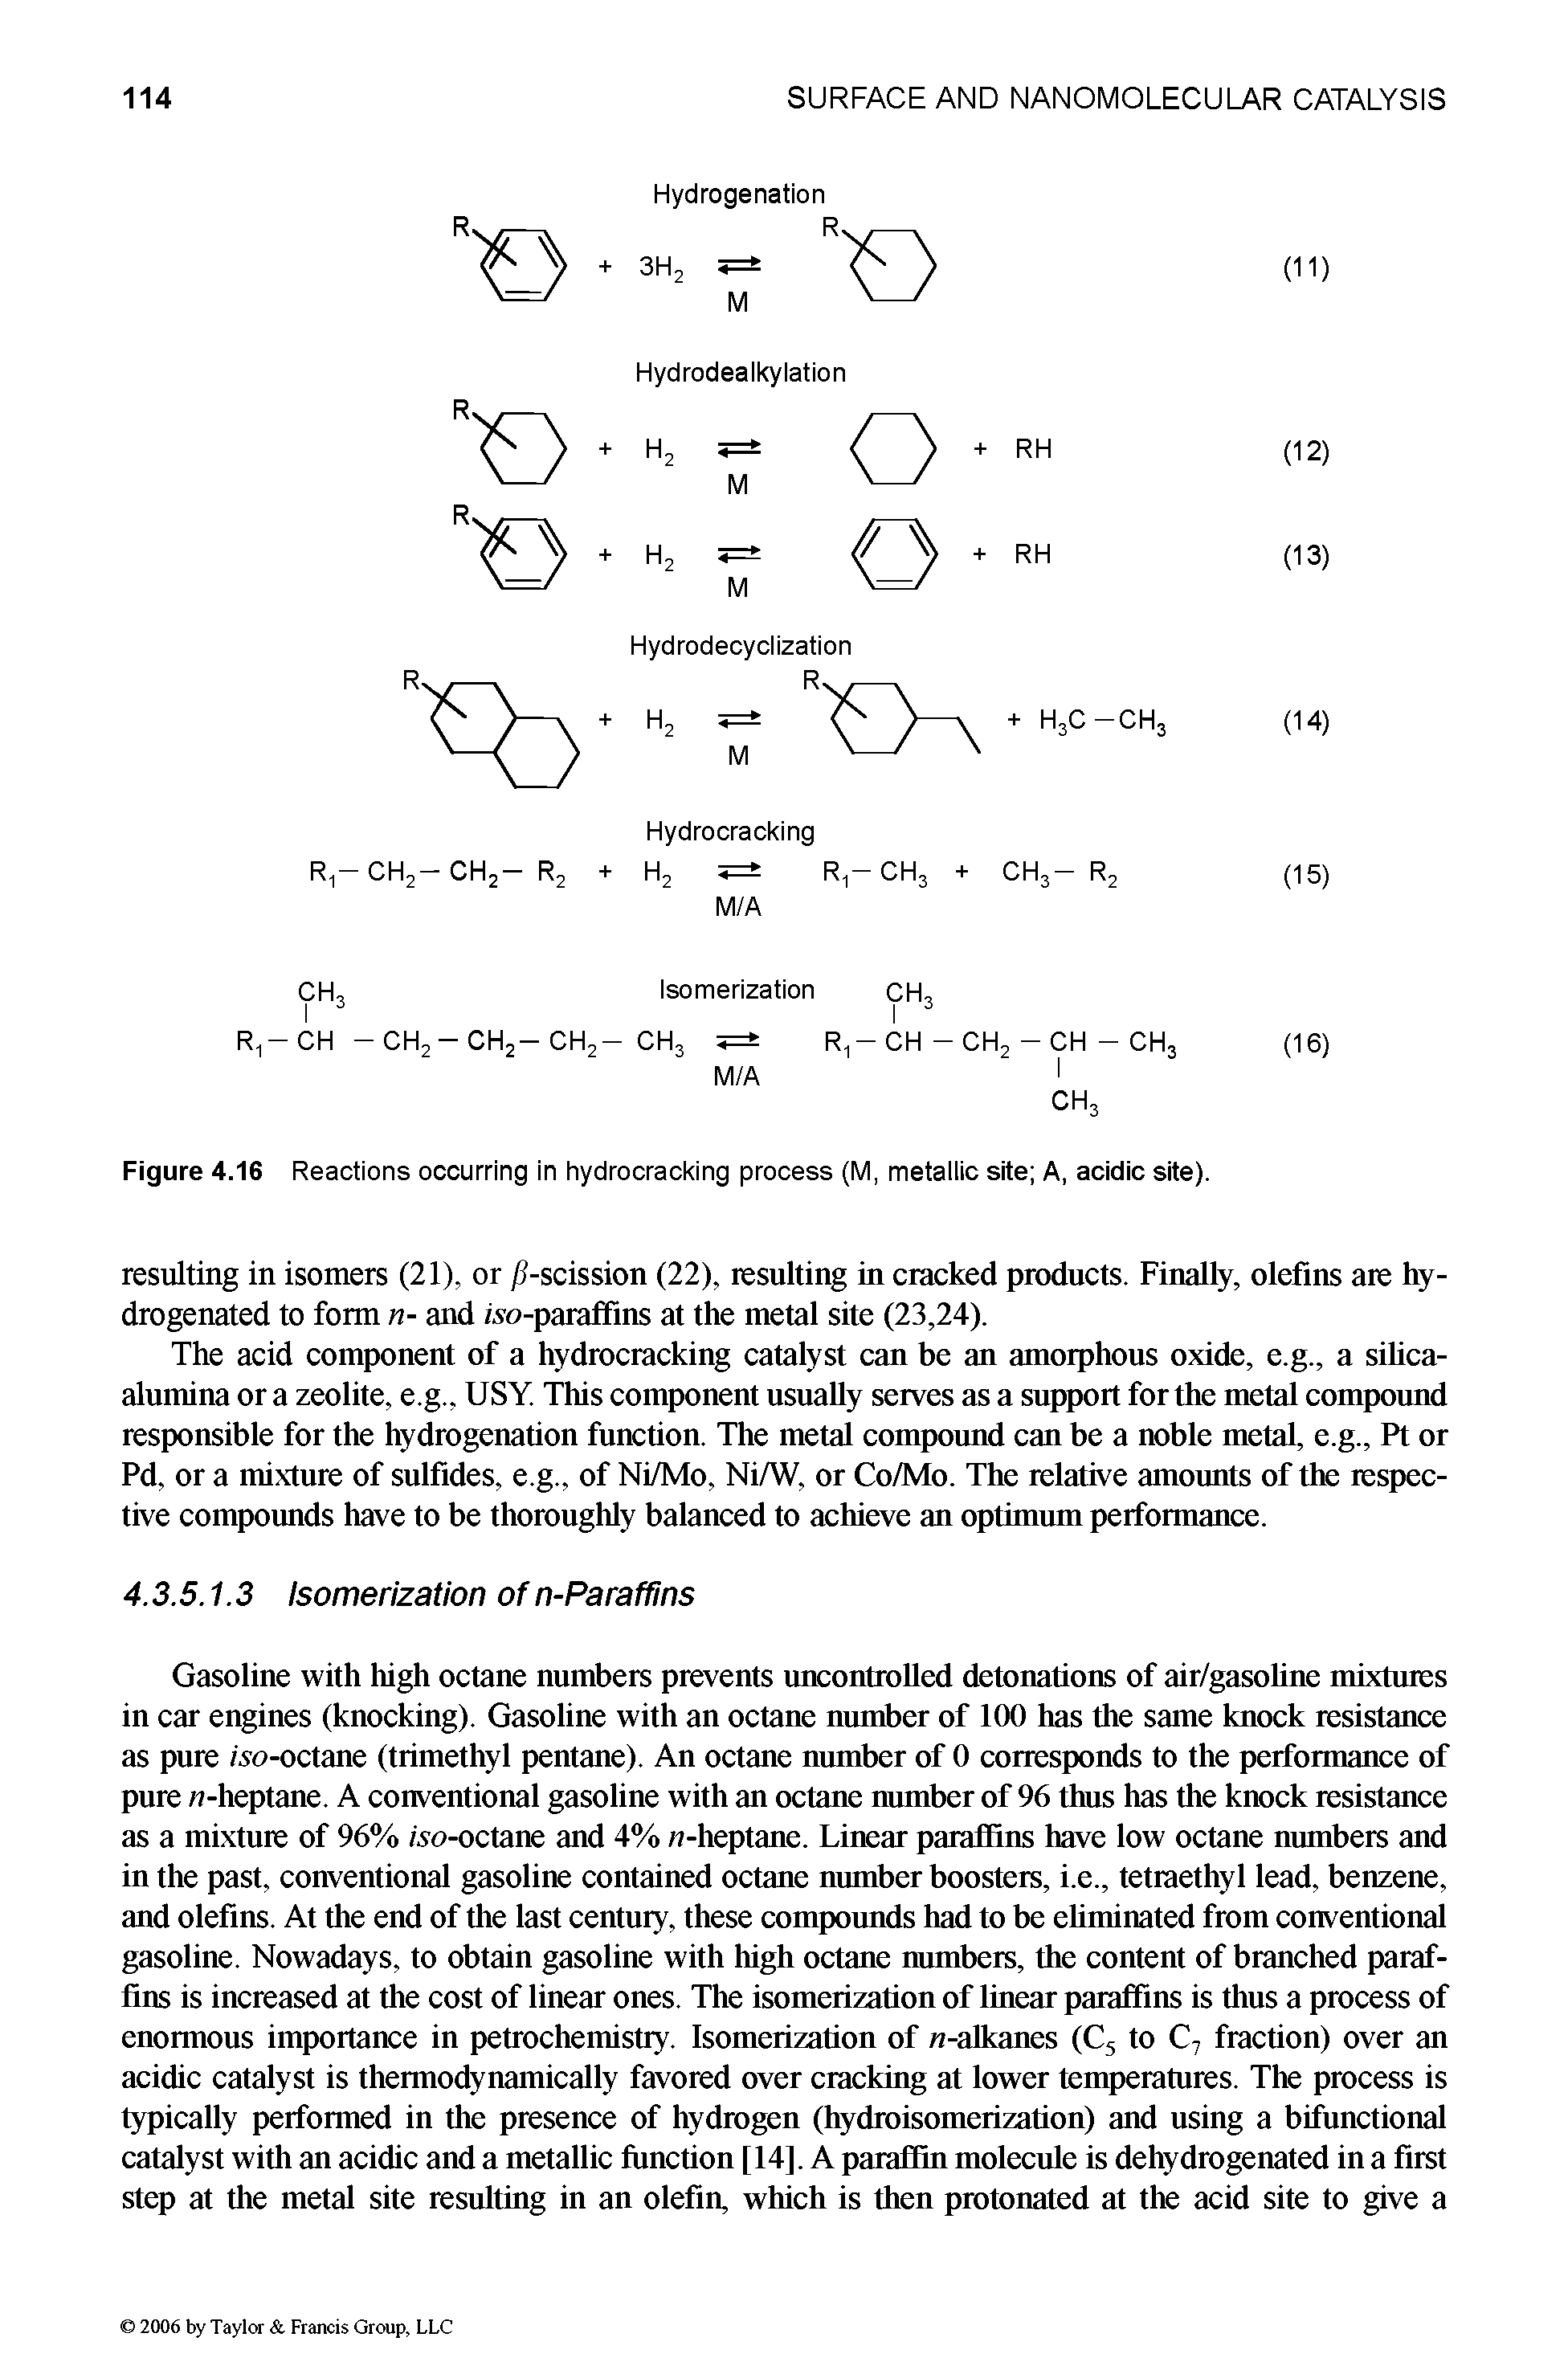 Figure 4.16 Reactions occurring in hydrocracking process (M, metallic site A, acidic site).